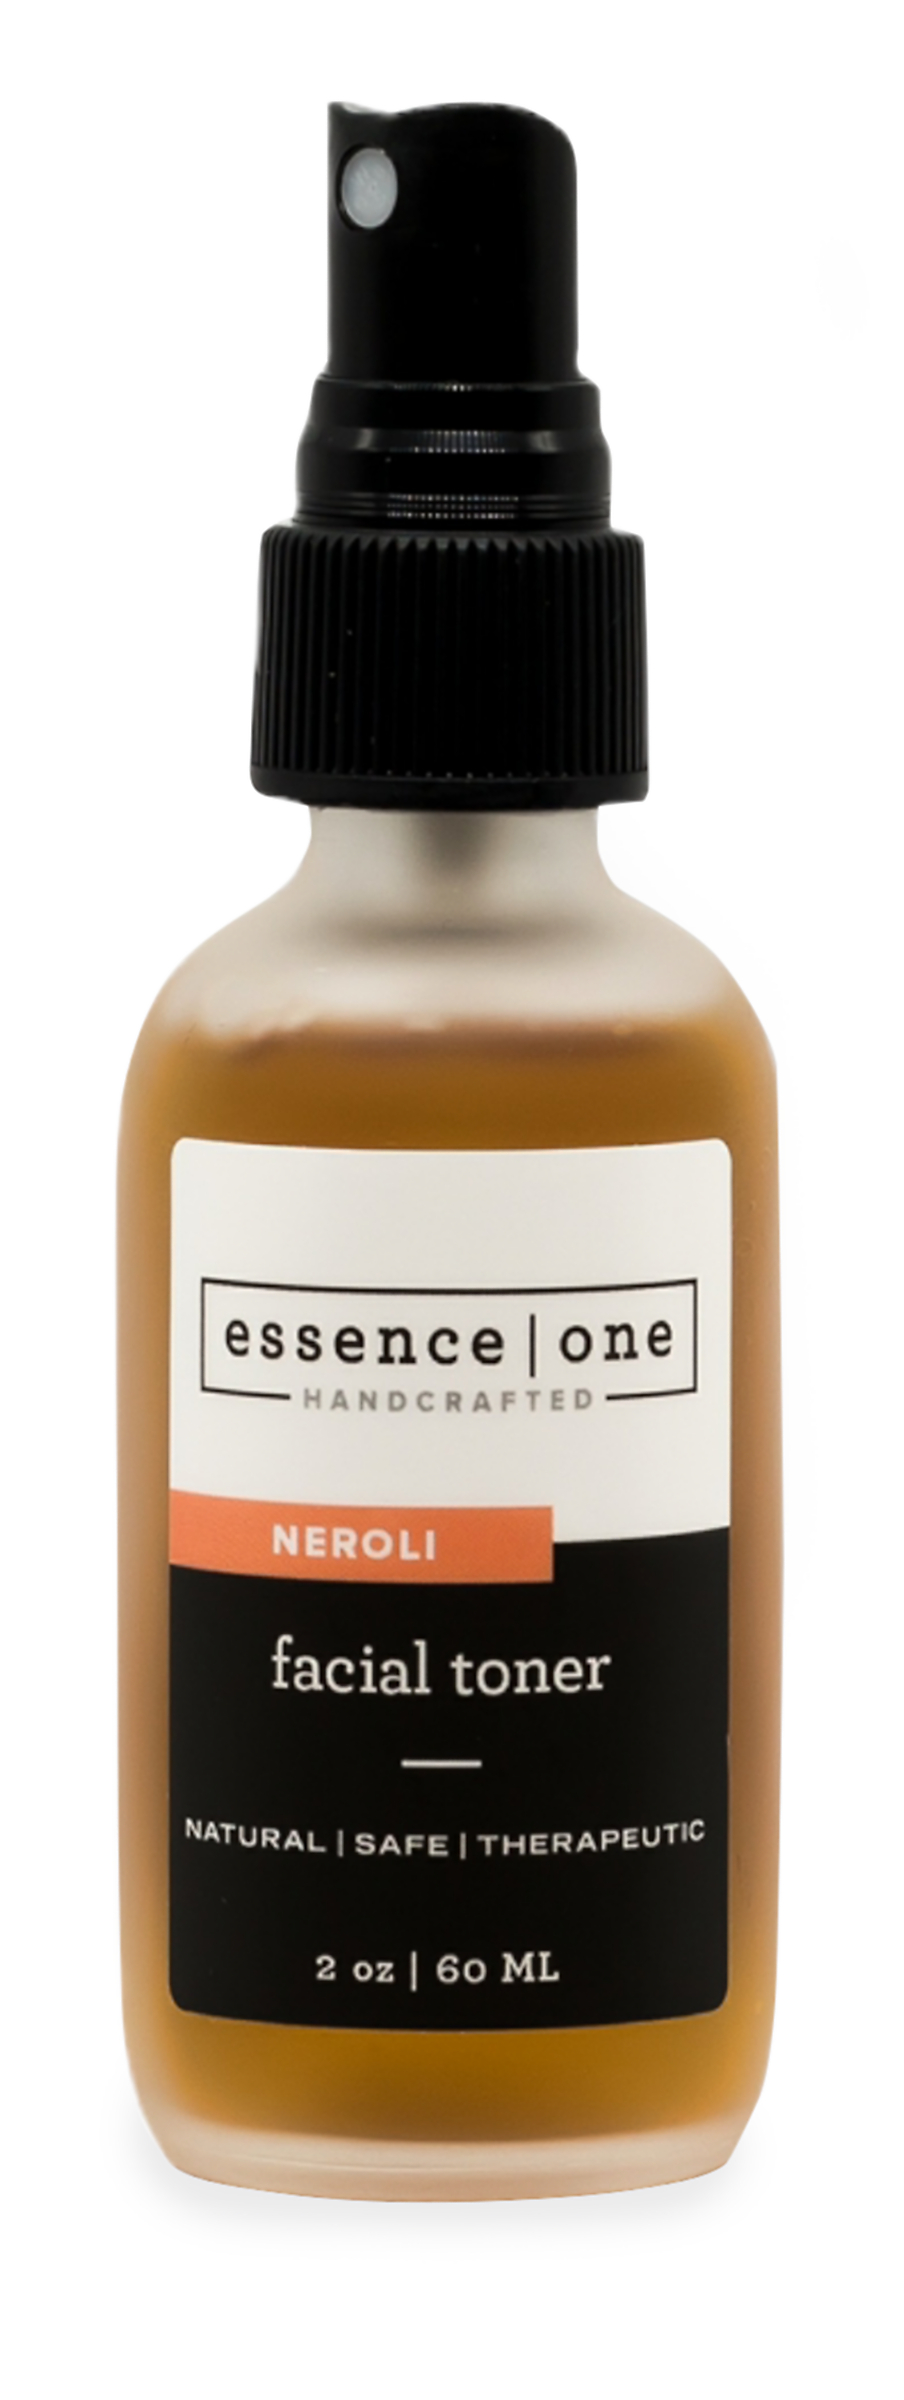 Essence One - Facial Toner in Neroli